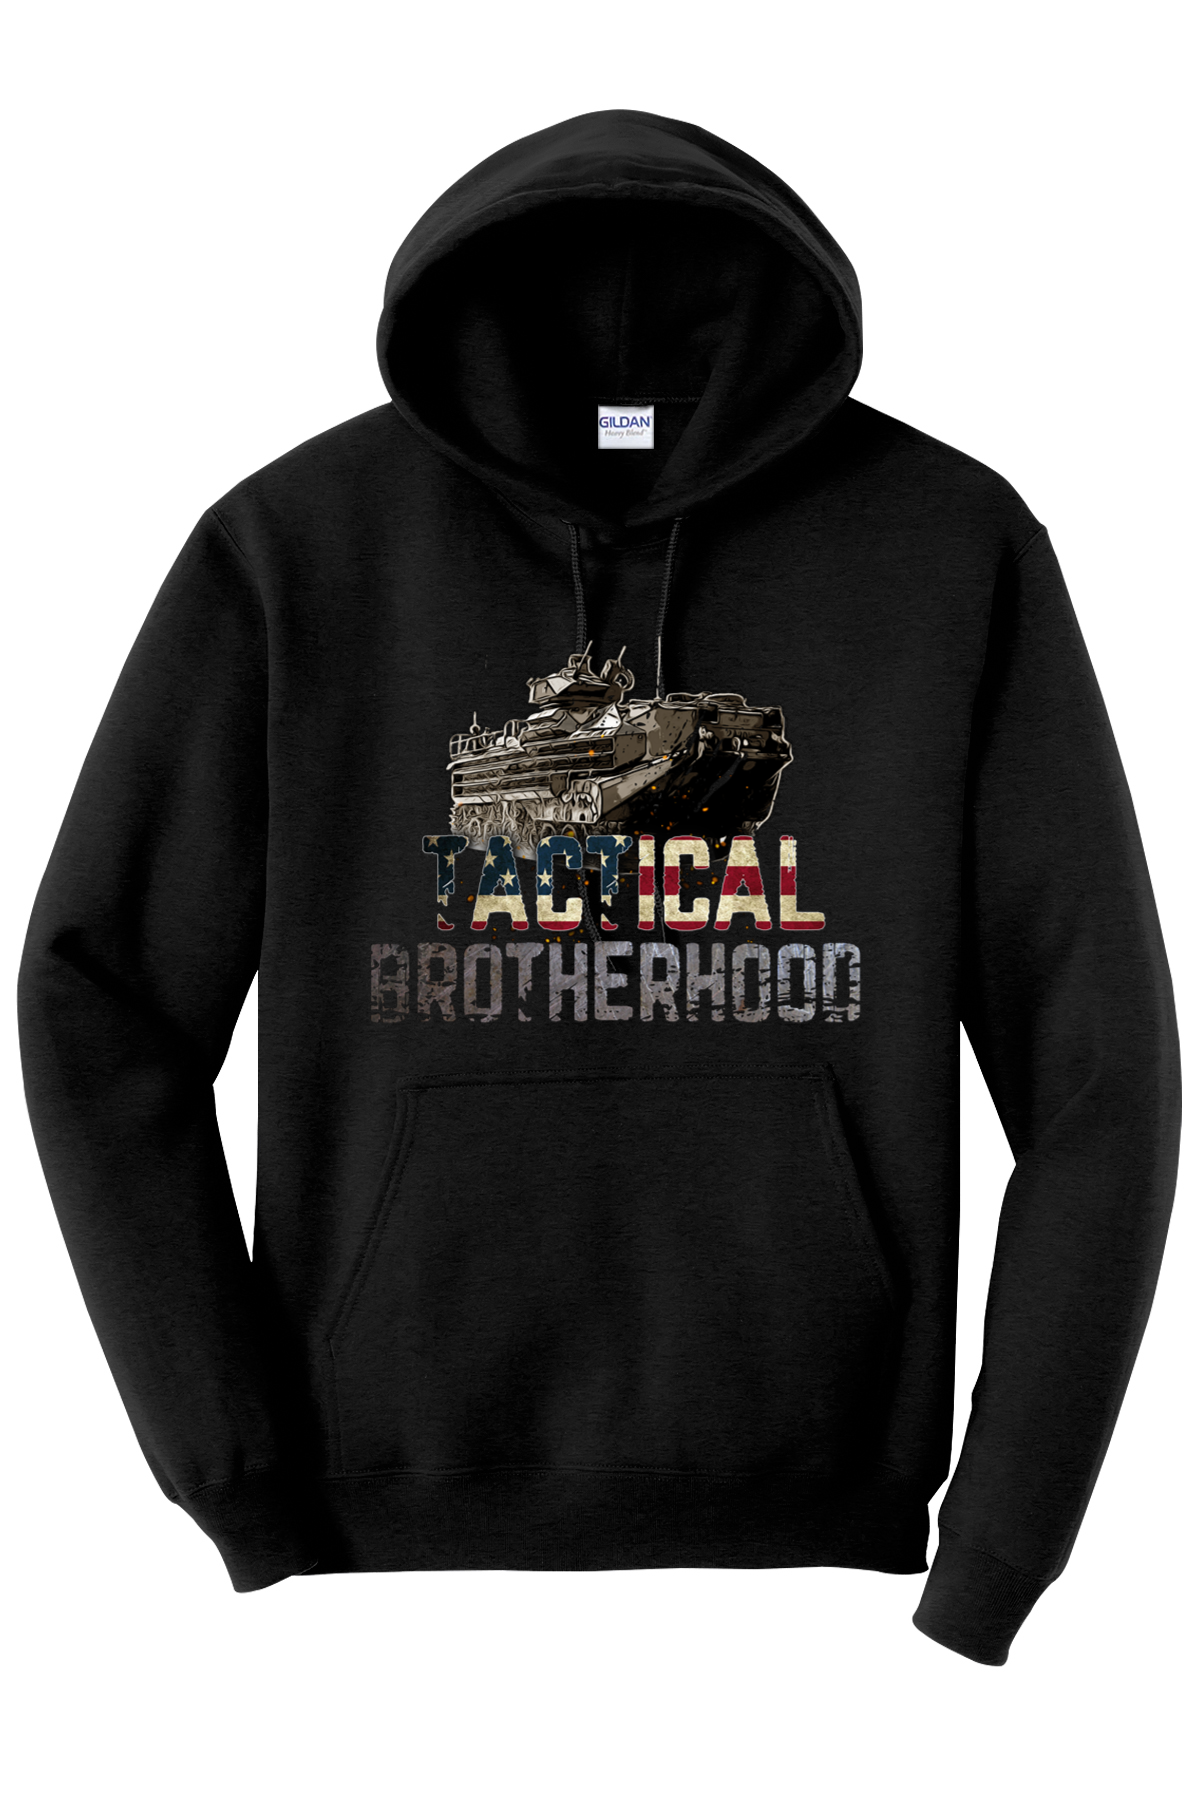 AAV- Tactical Brotherhood Hoodie